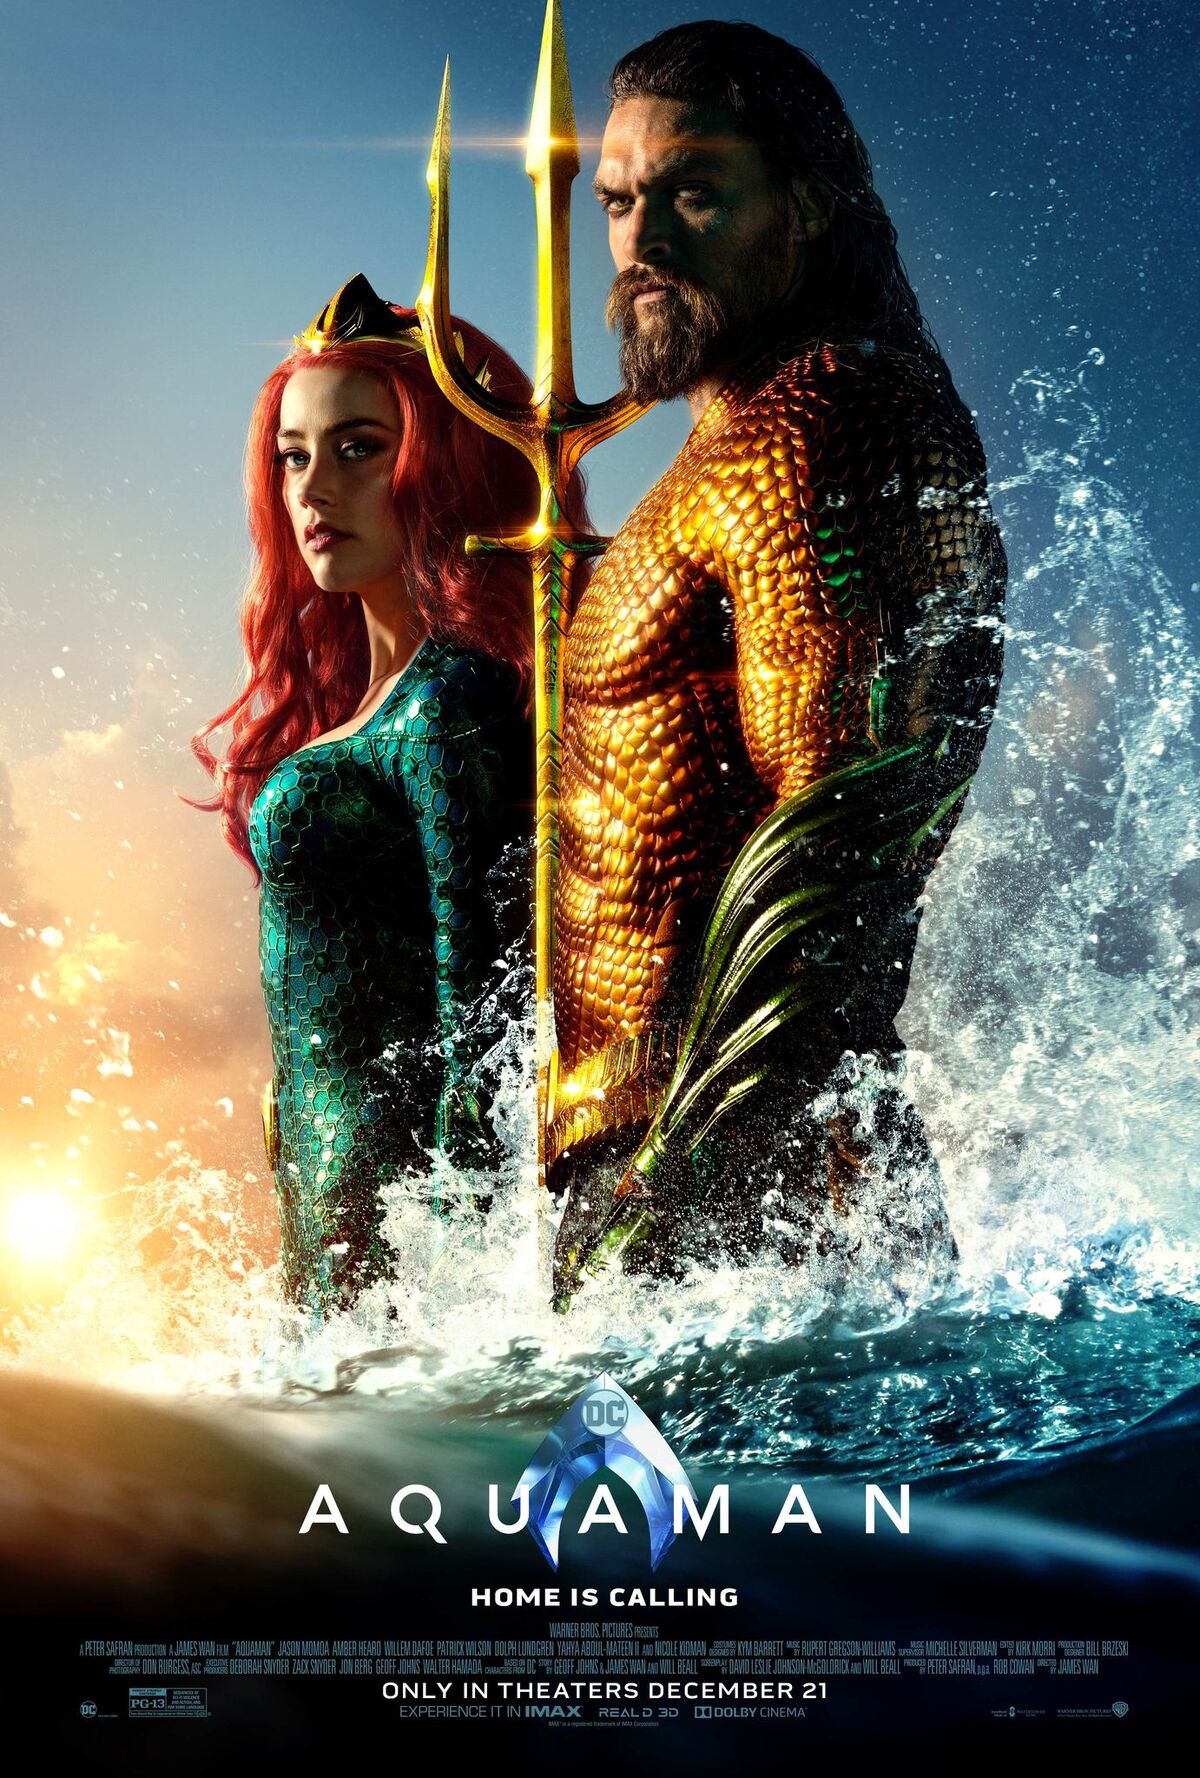 Aquaman 2 Will See Director James Wan Embracing His Horror Roots